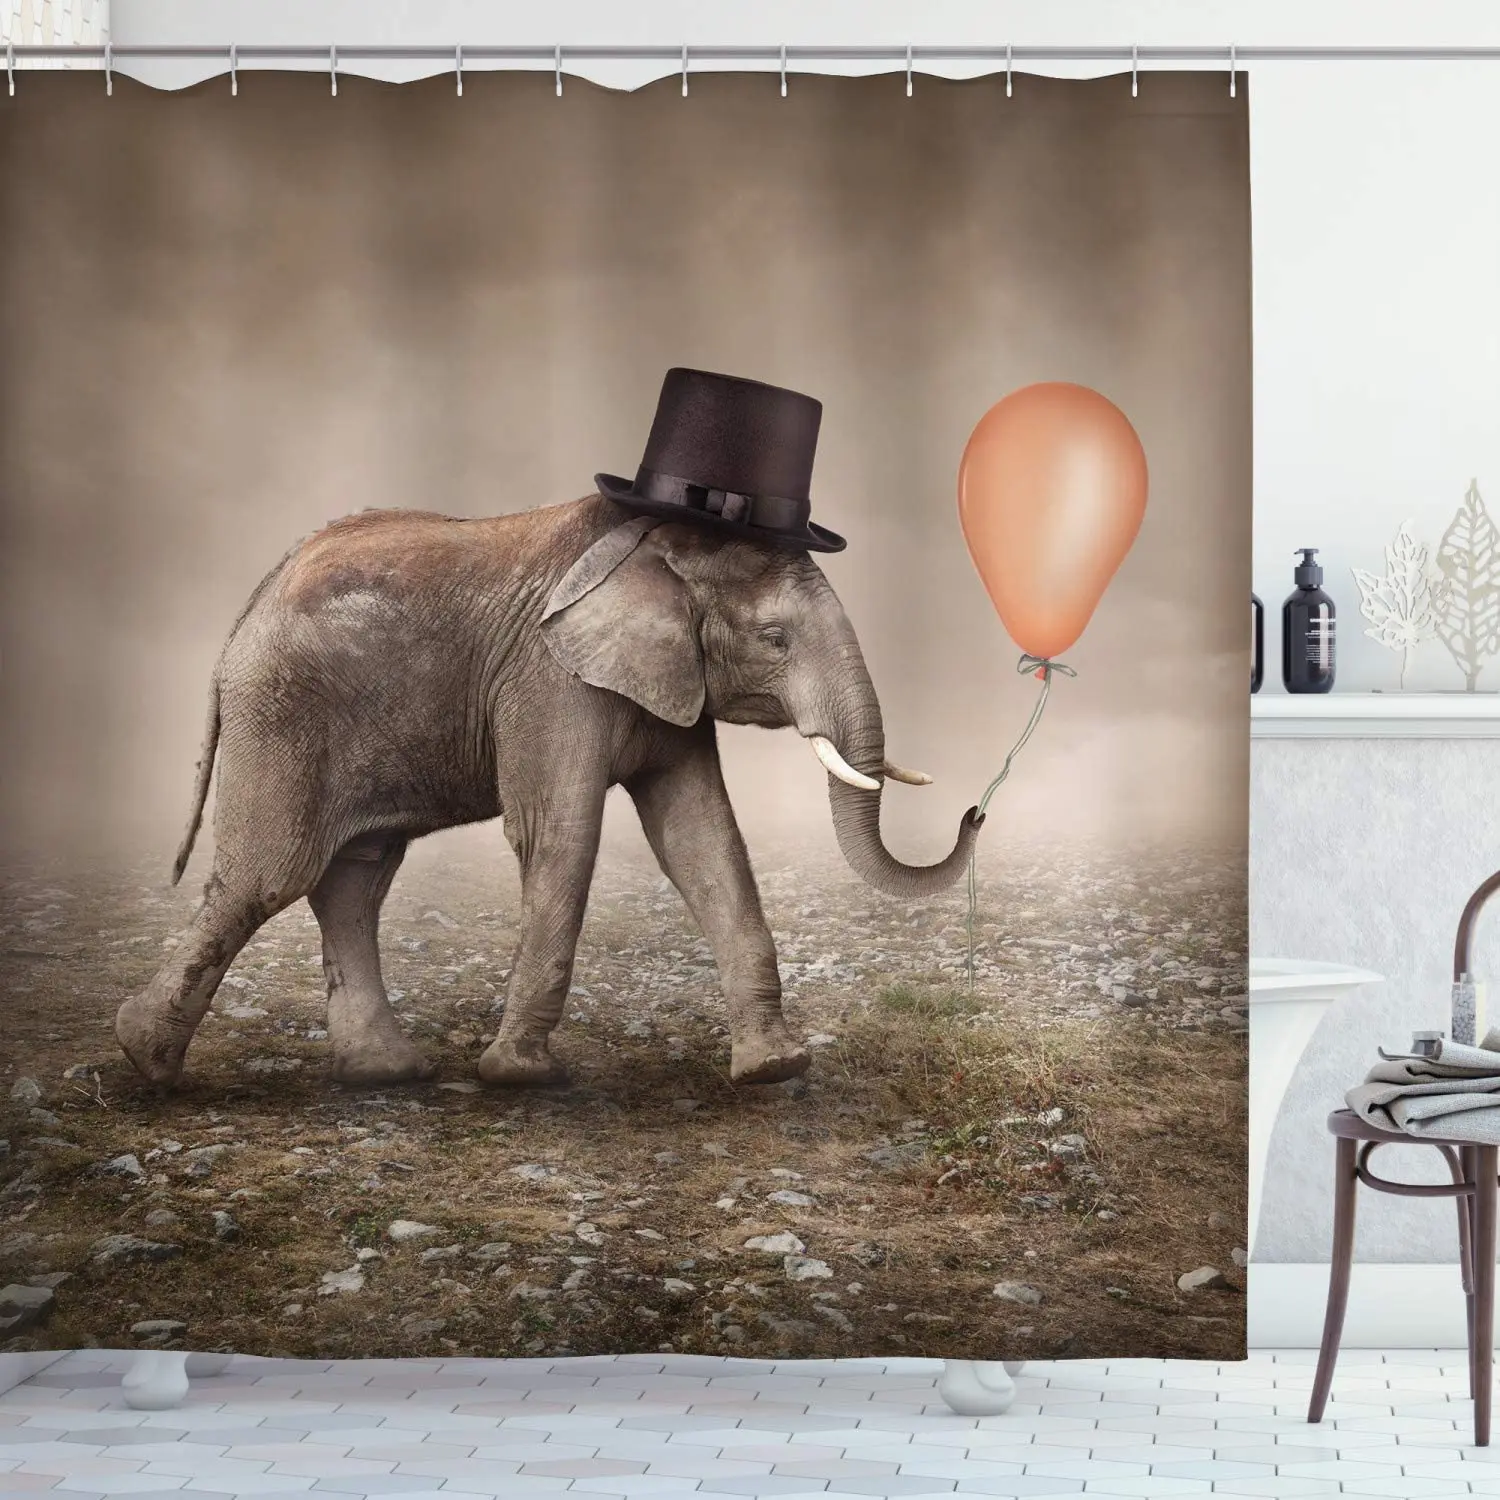 

Elephant Shower Curtain, Illusionist Elephant with Black Hat Magic Balloon Dreamy Surreal Art, Cloth Fabric Bathroom D